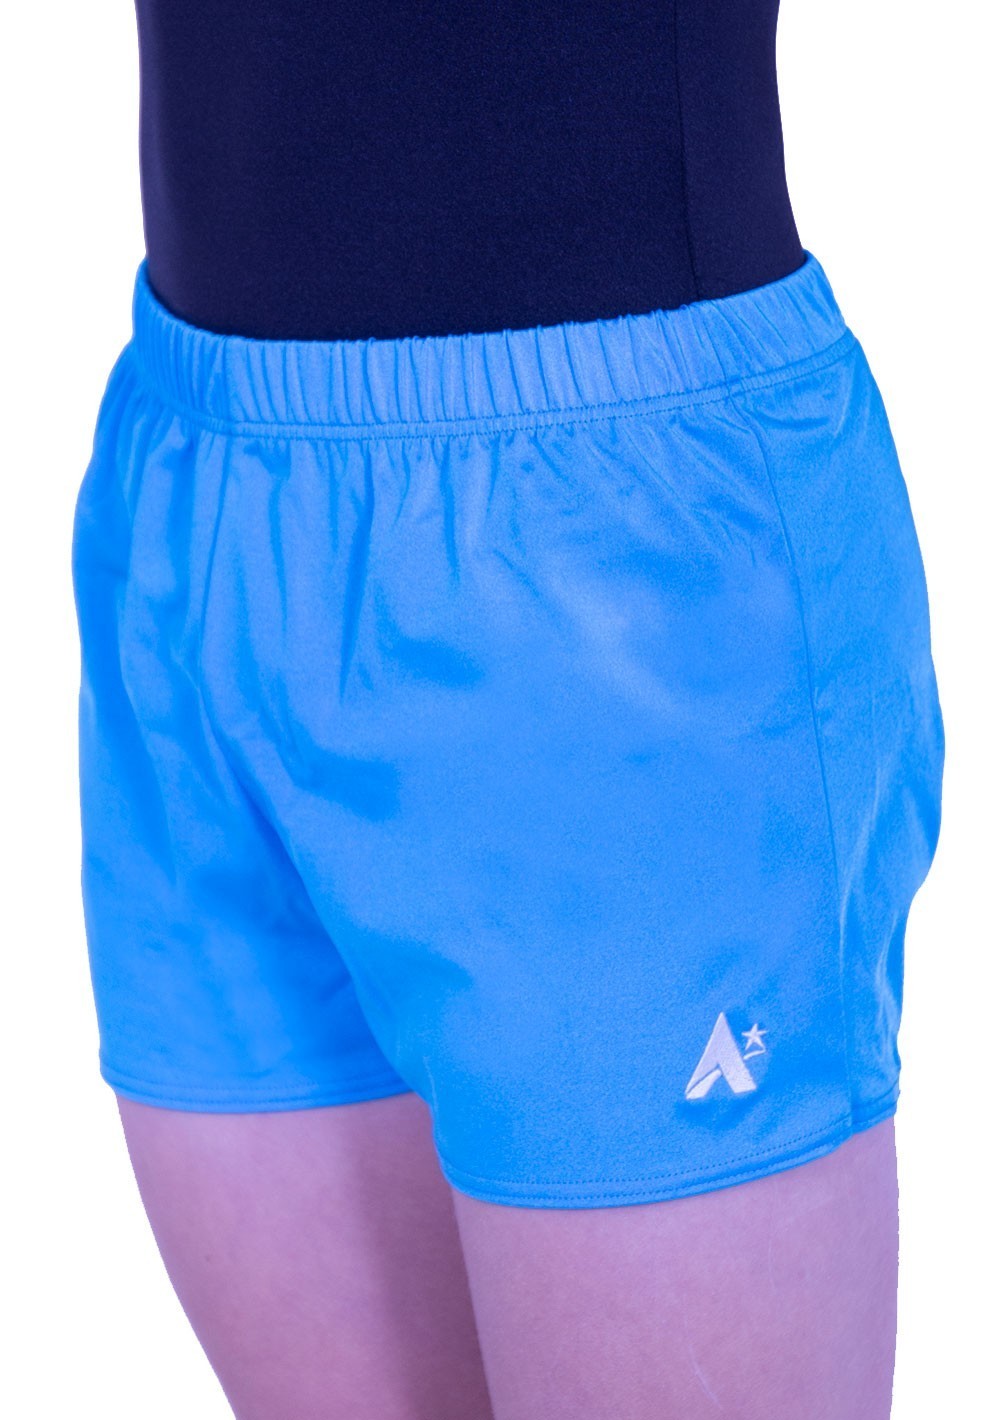 Pool Boy Women's Athletic Short Shorts